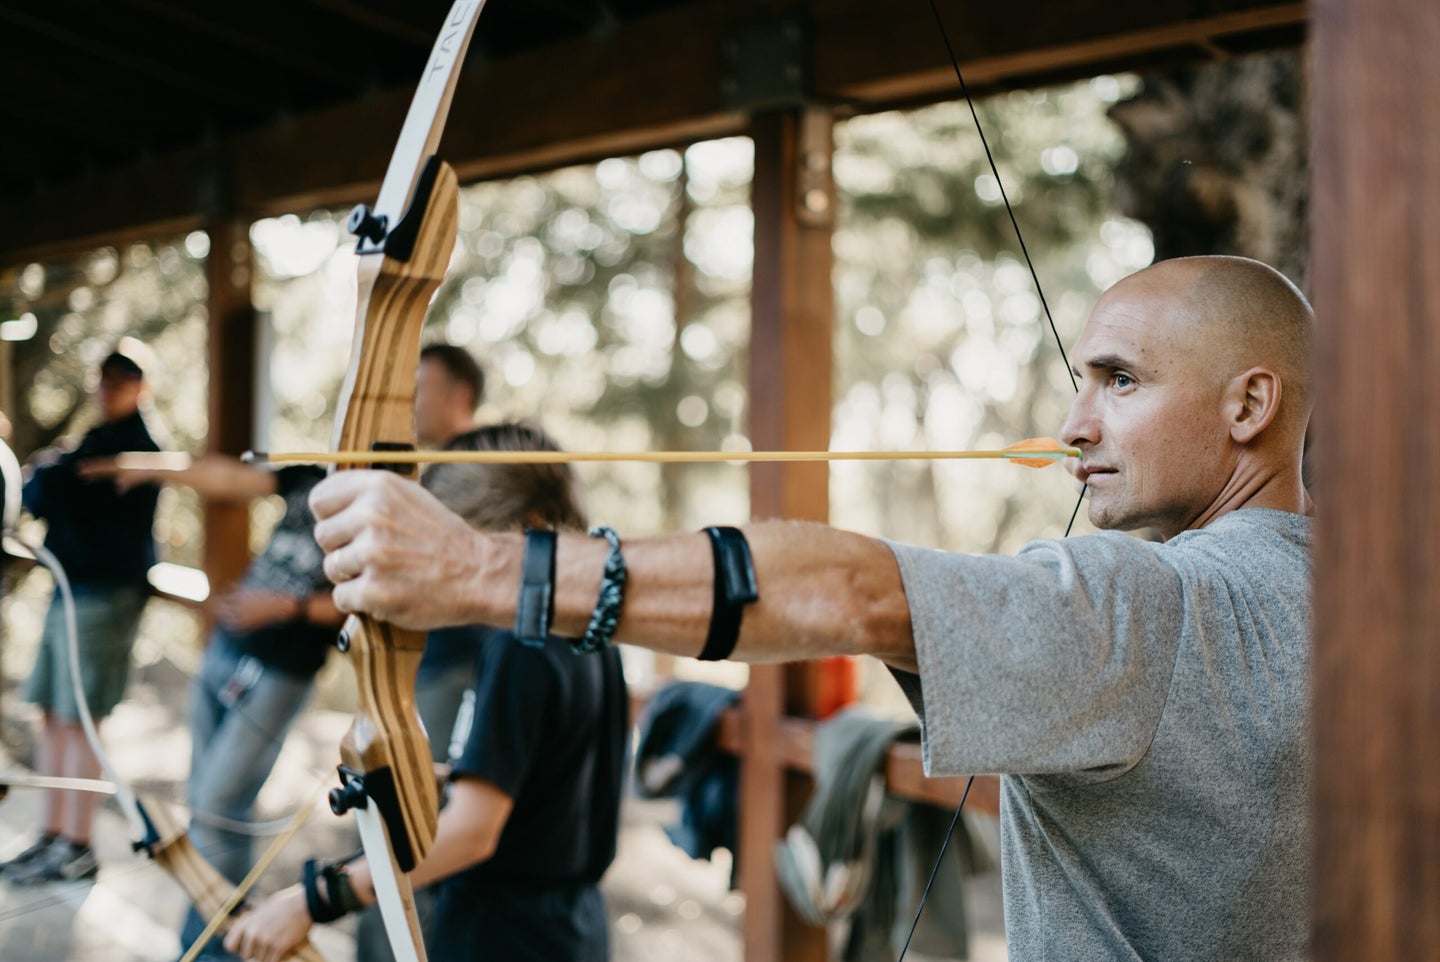 man shooting recurve bow